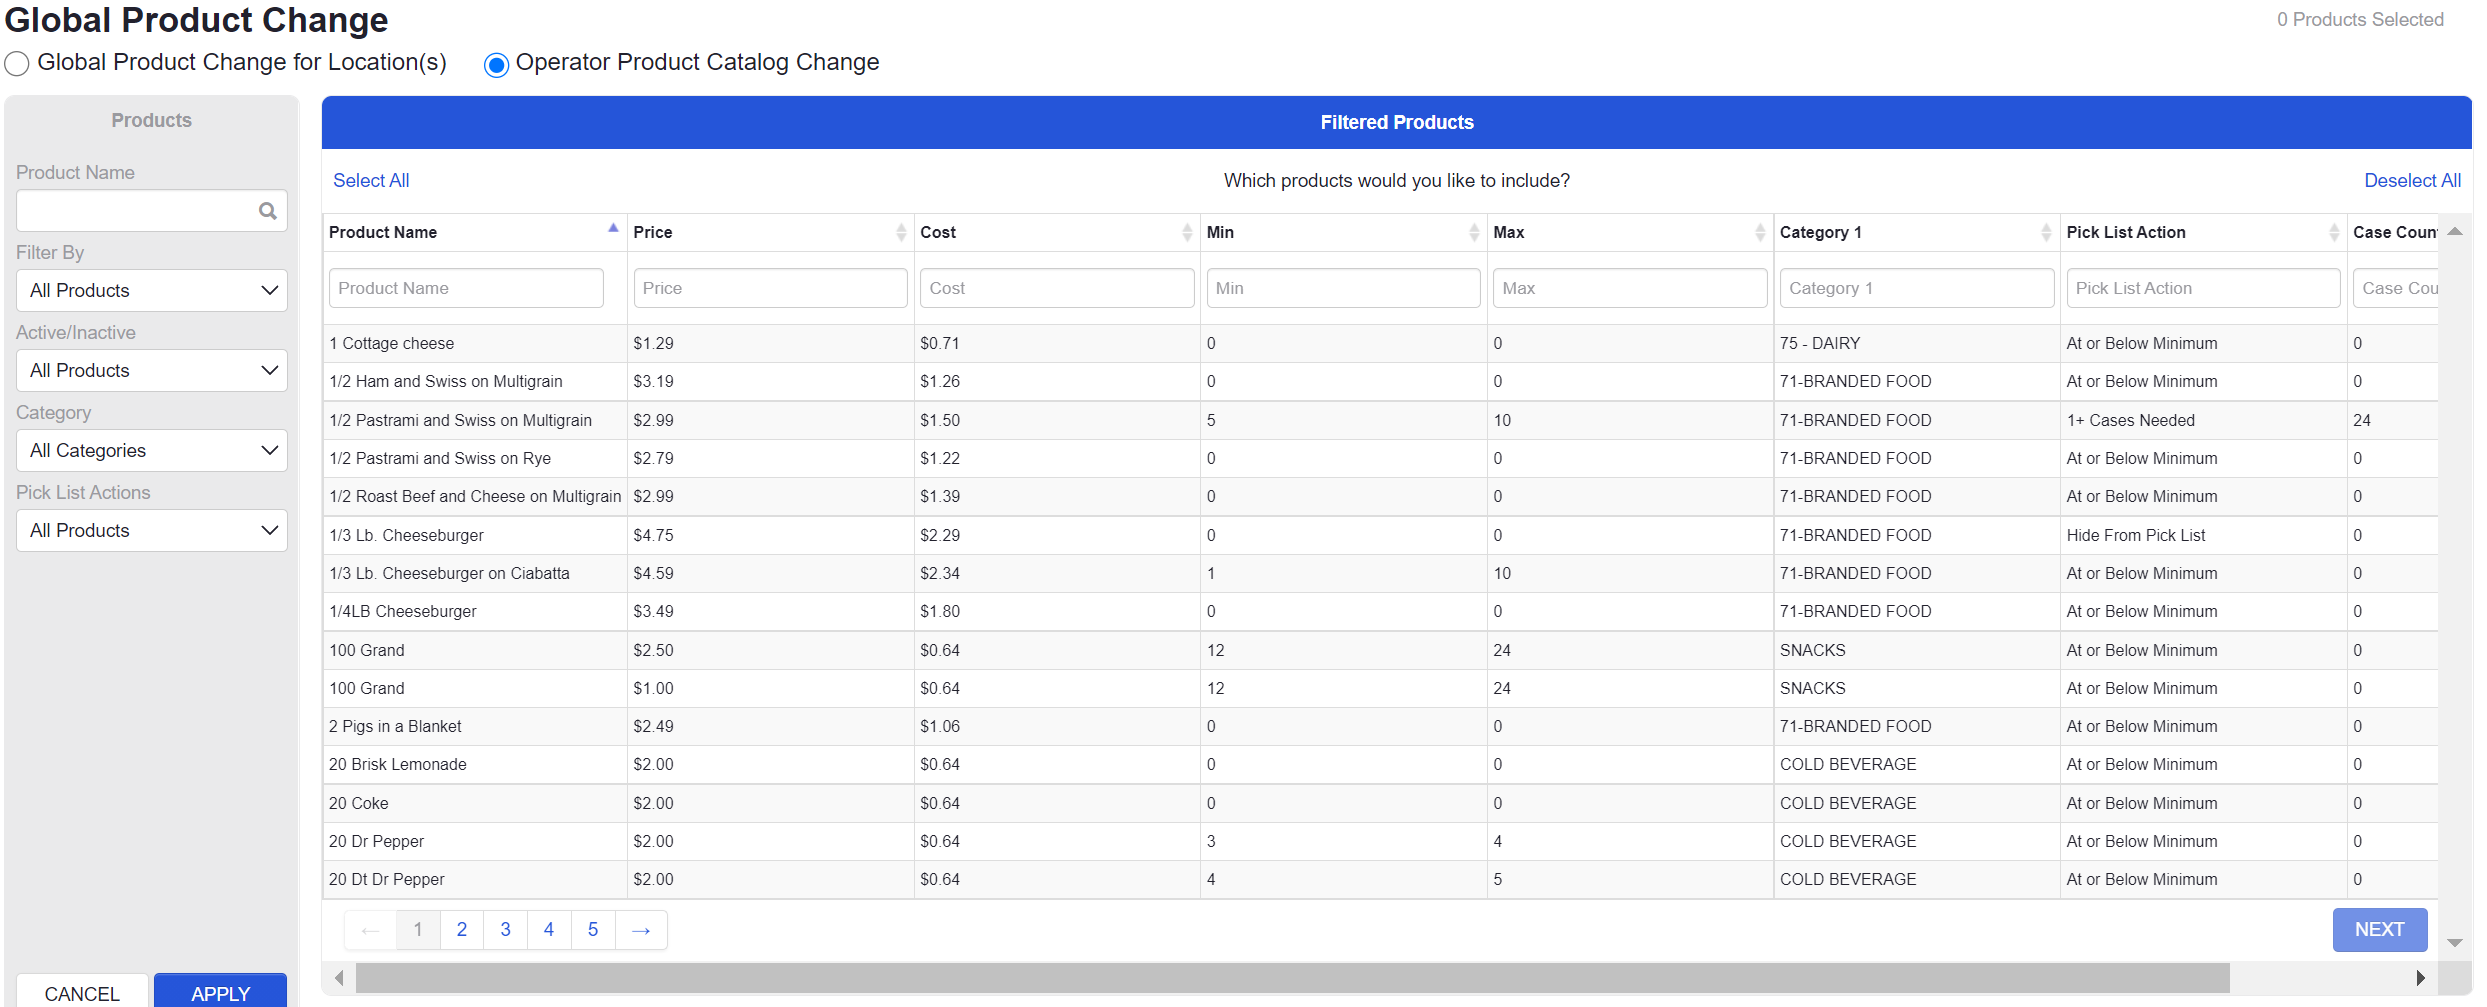 ADM - Global Product Change - Operator Product Catalog Change - Full screen.png